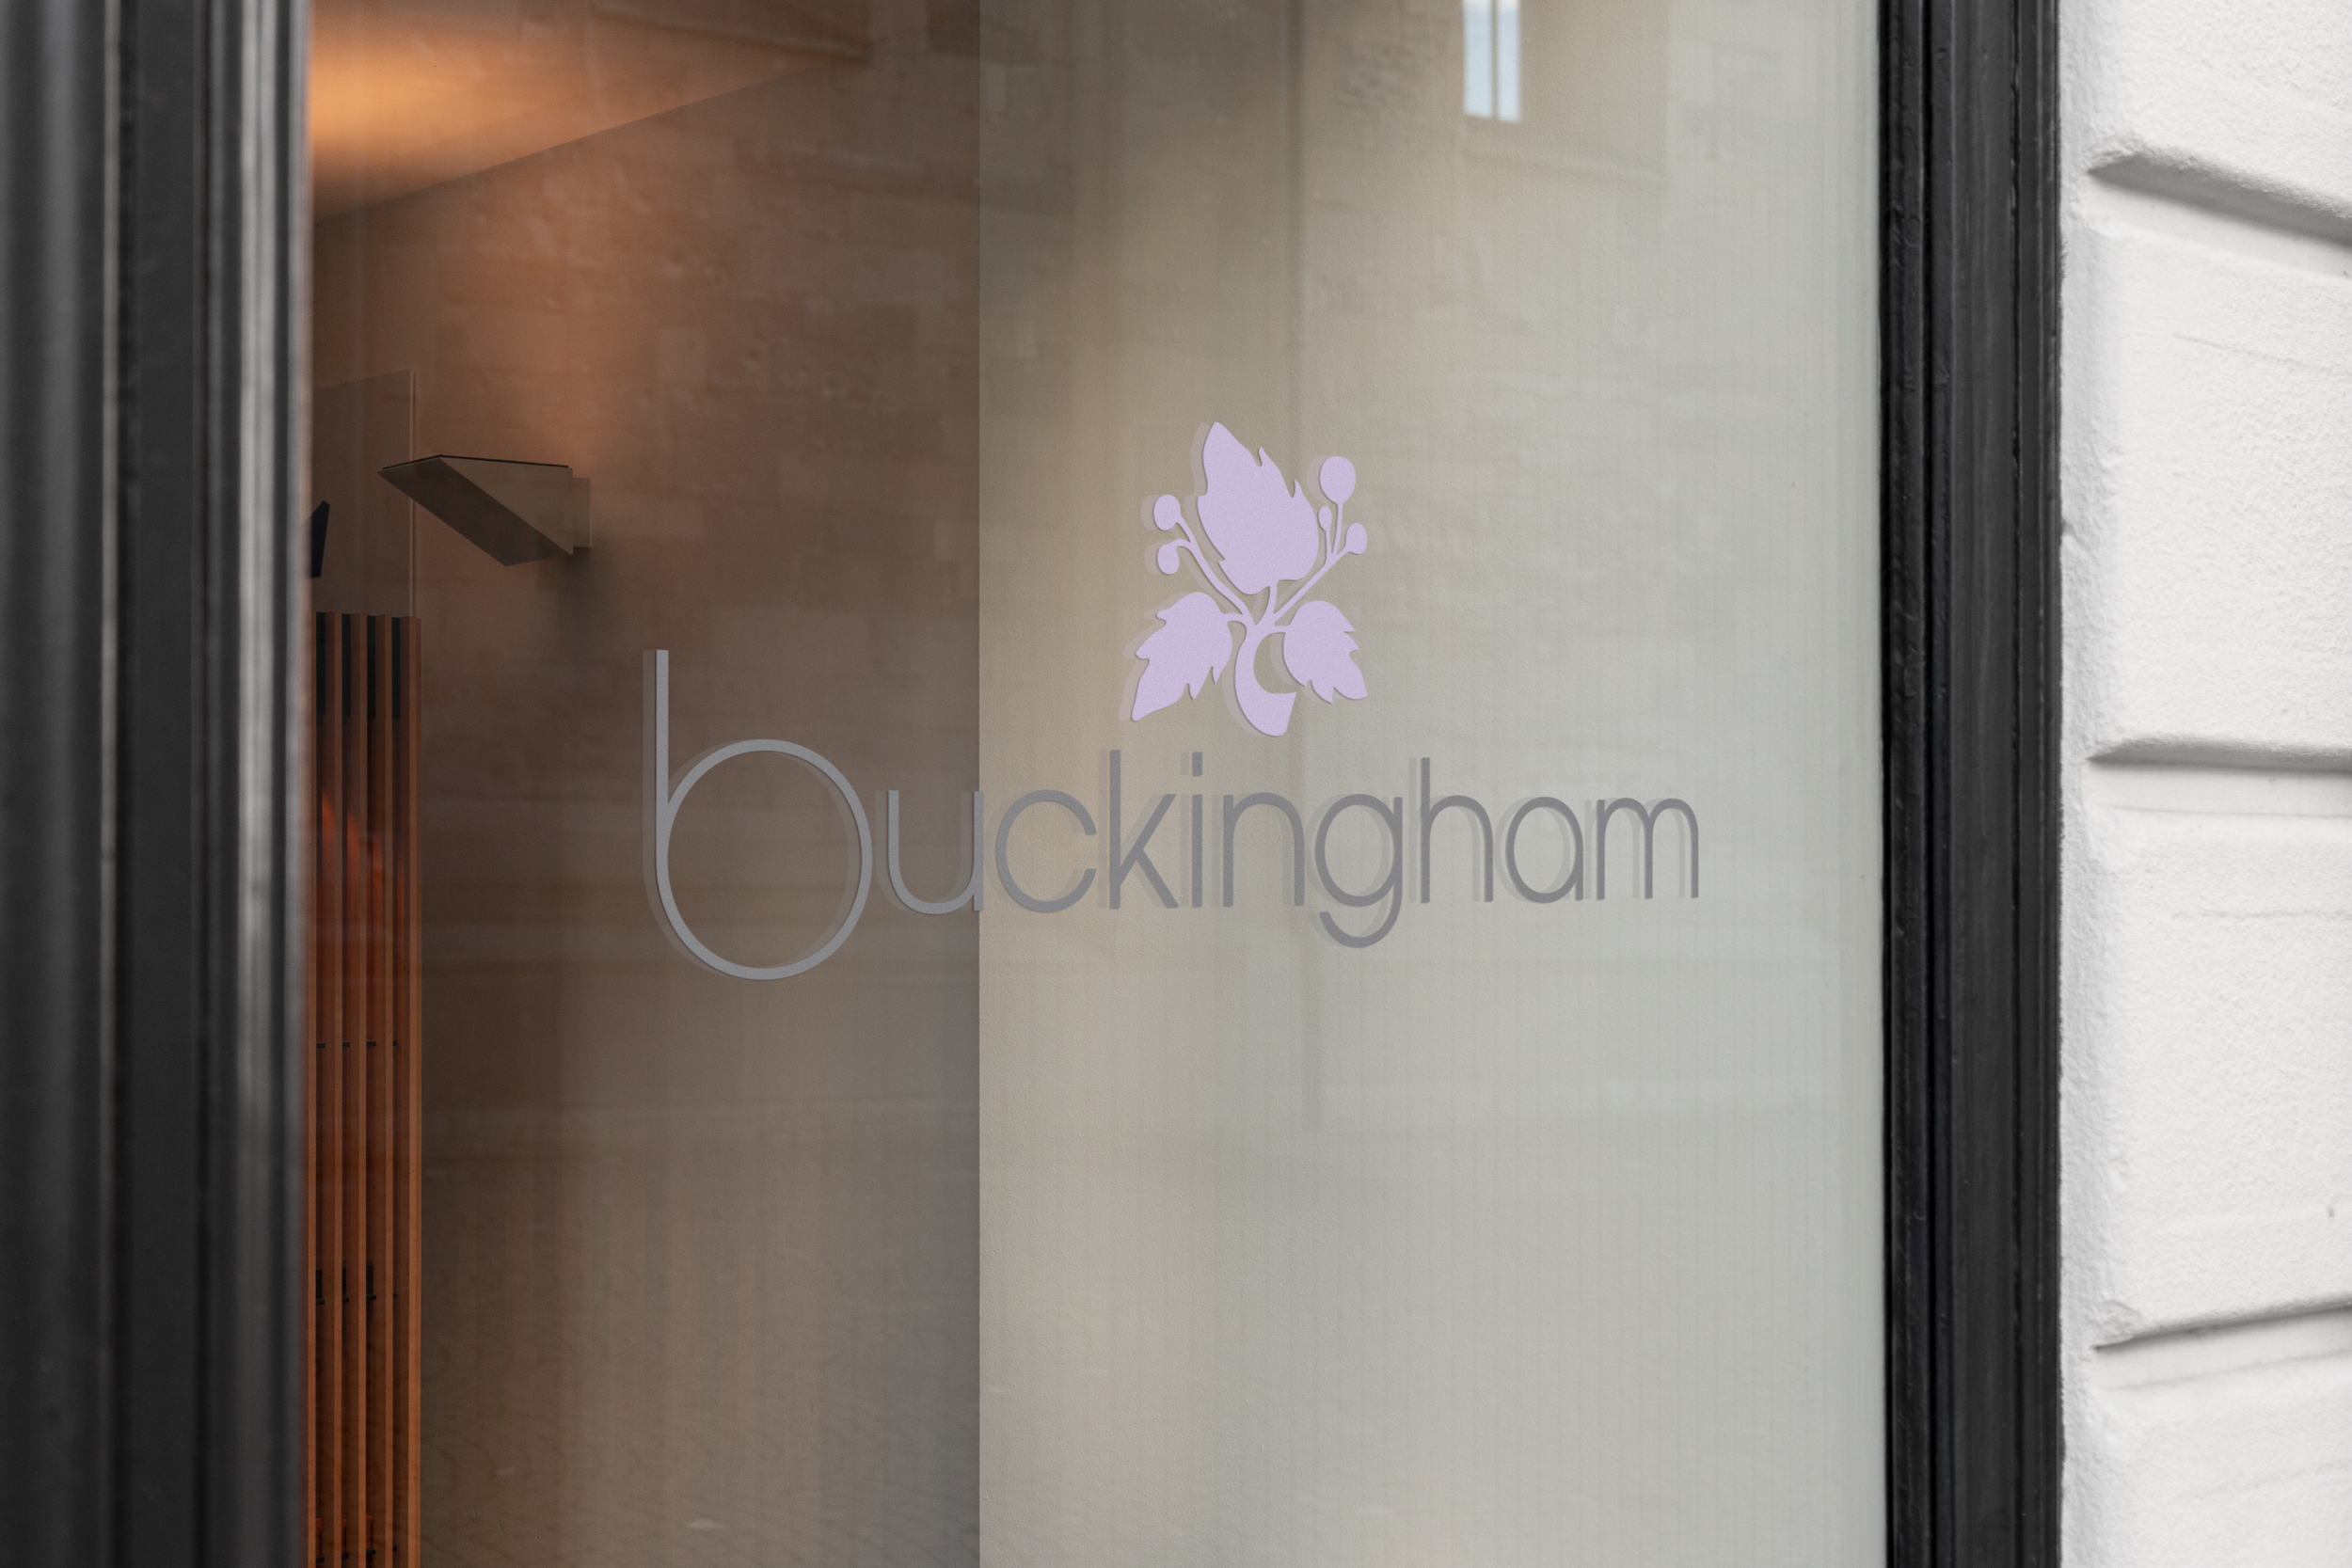 Buckingham_Window Sign Mockup.png